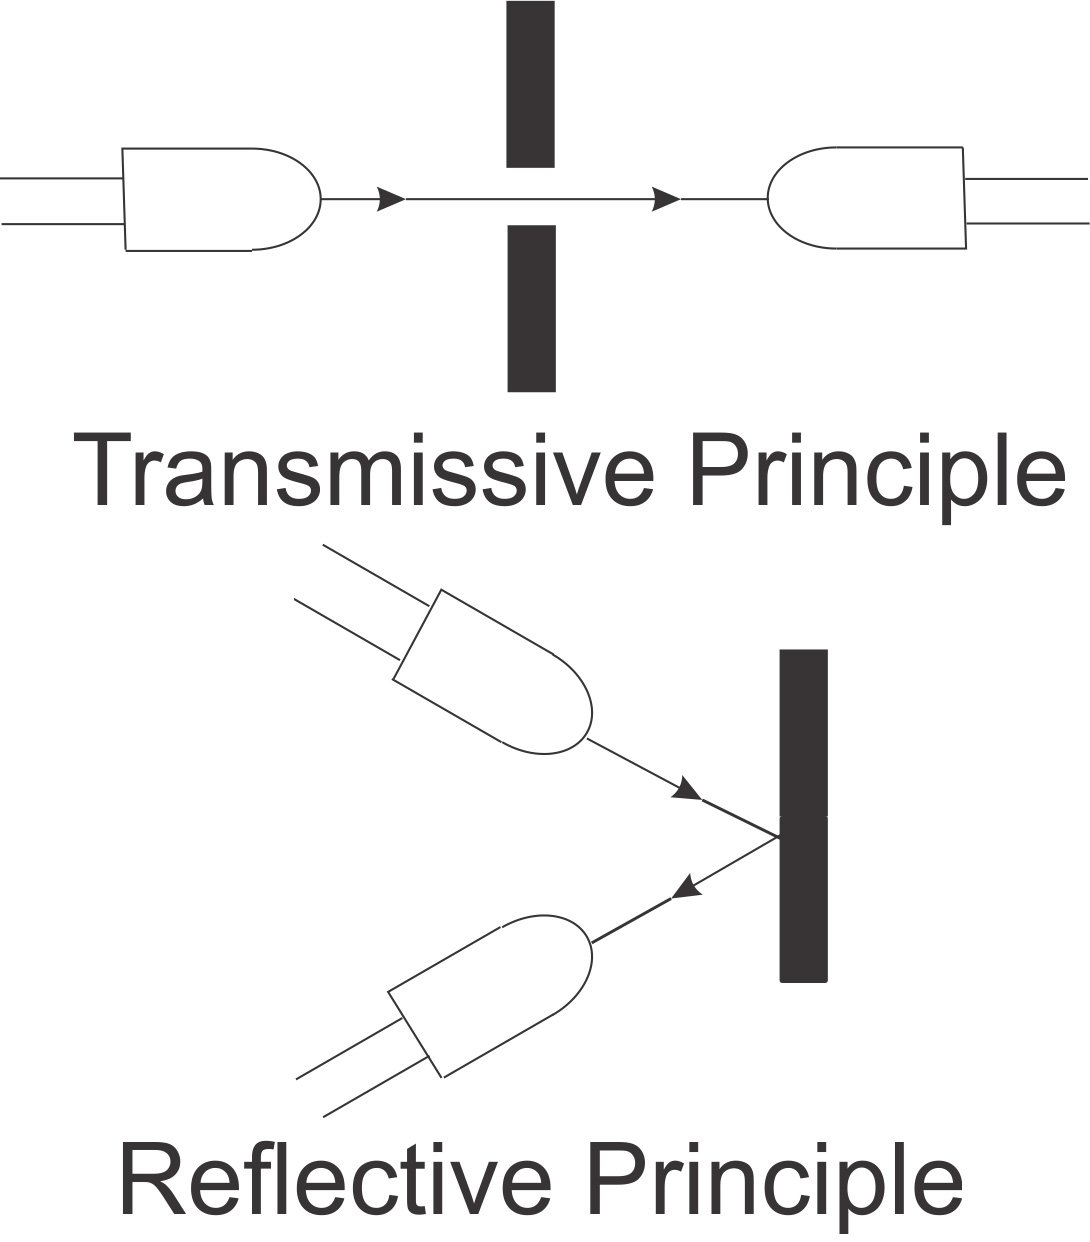 Figure 1. Transmissive vs. reflective princples. Source: Light in Motion